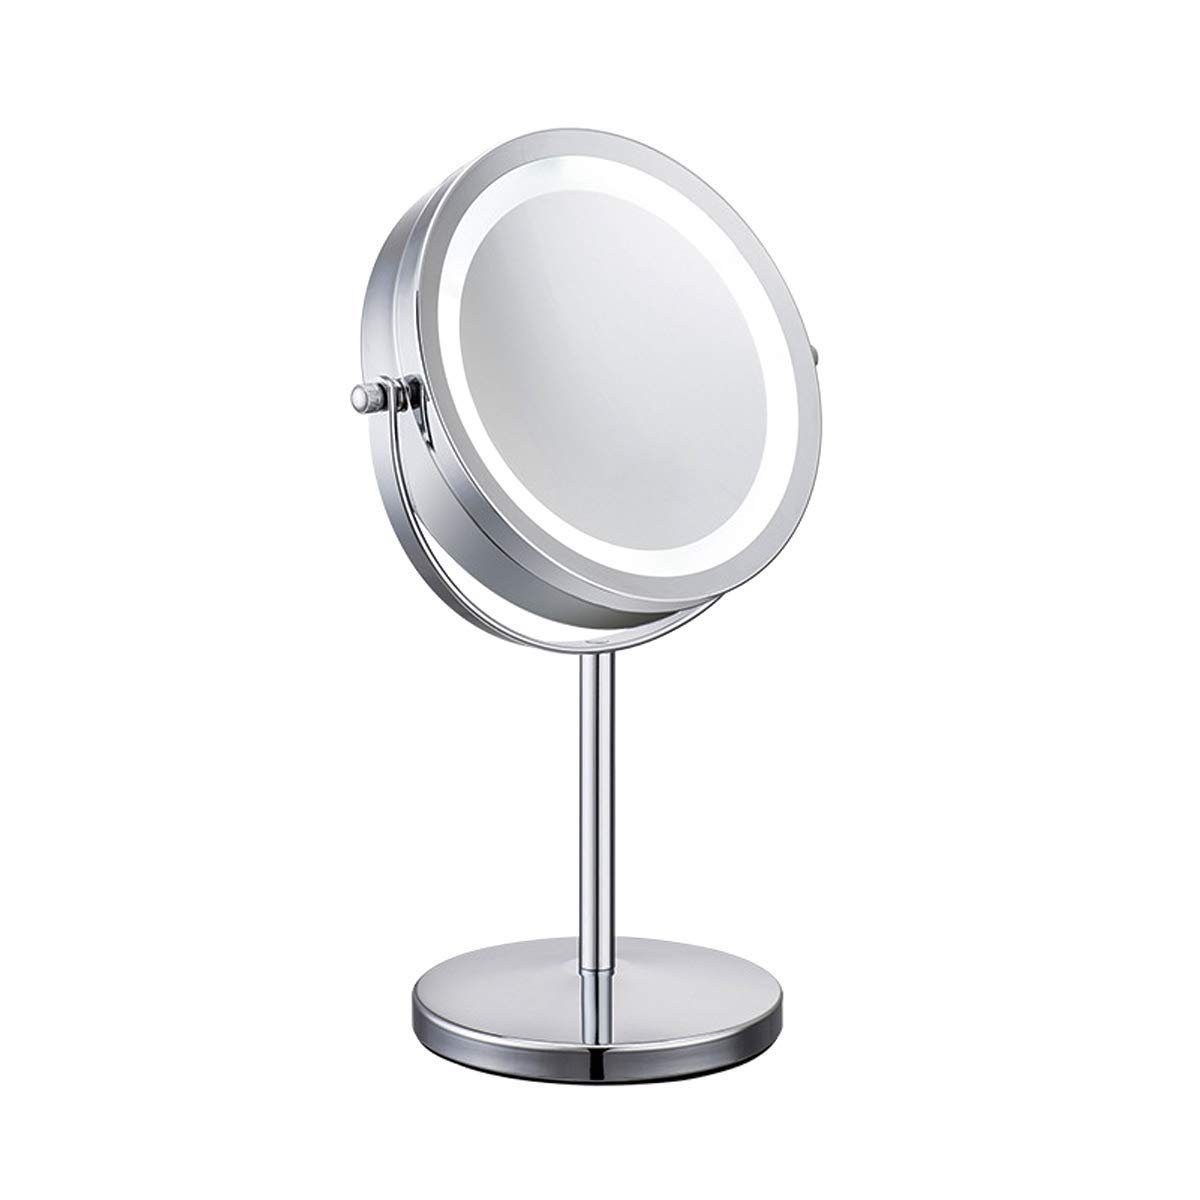 Haiaveng Kosmetikspiegel Kosmetikspiegel mit LED Beleuchtung - 360° drehbar, 5X Vergrößerung